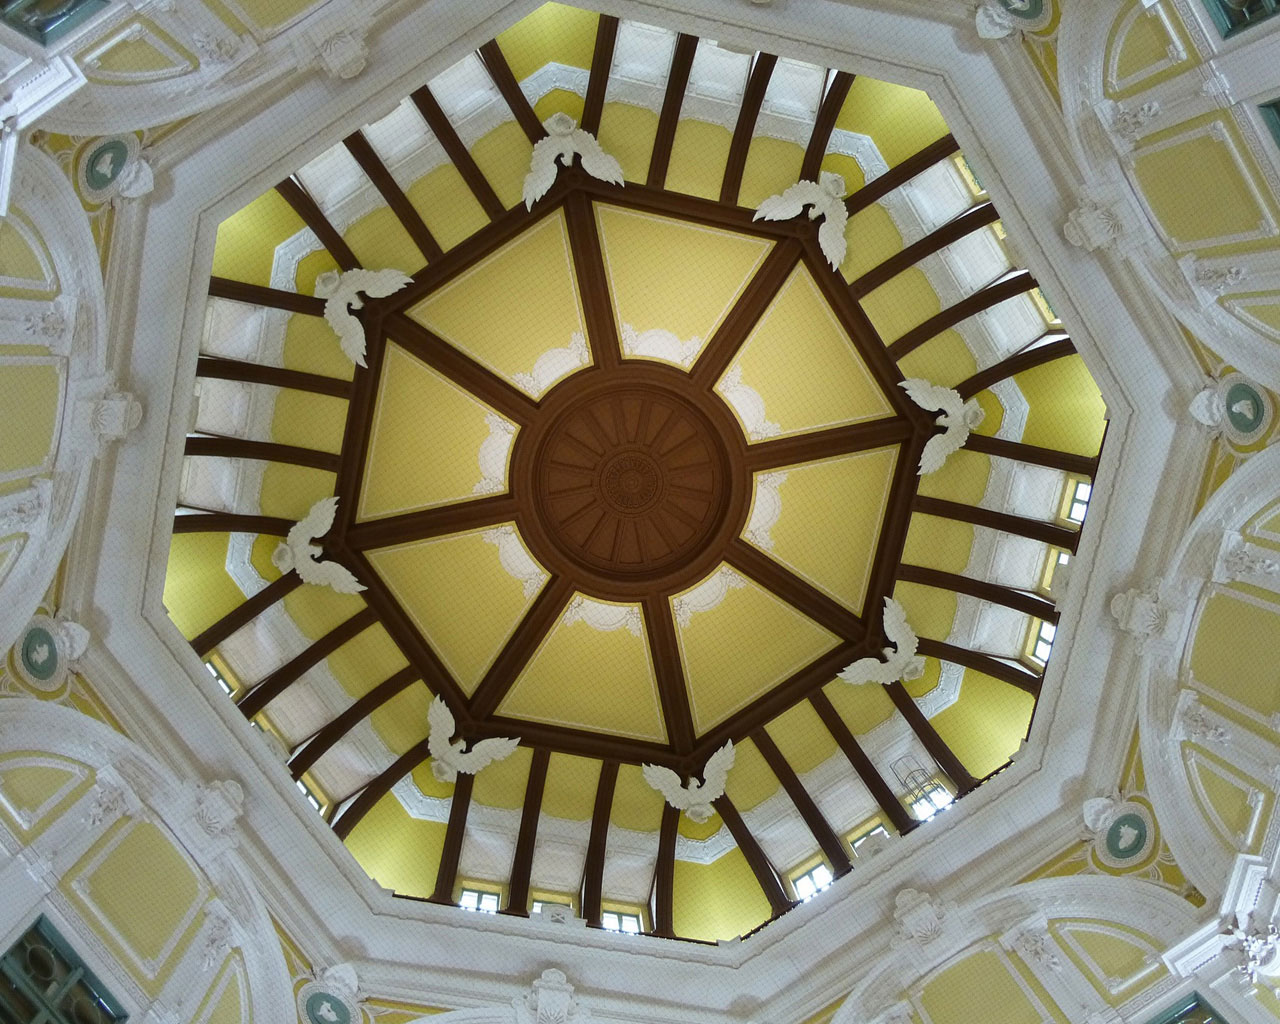 Fotografija prikazuje kupolu oblika pravilnog osmerokuta iznutra